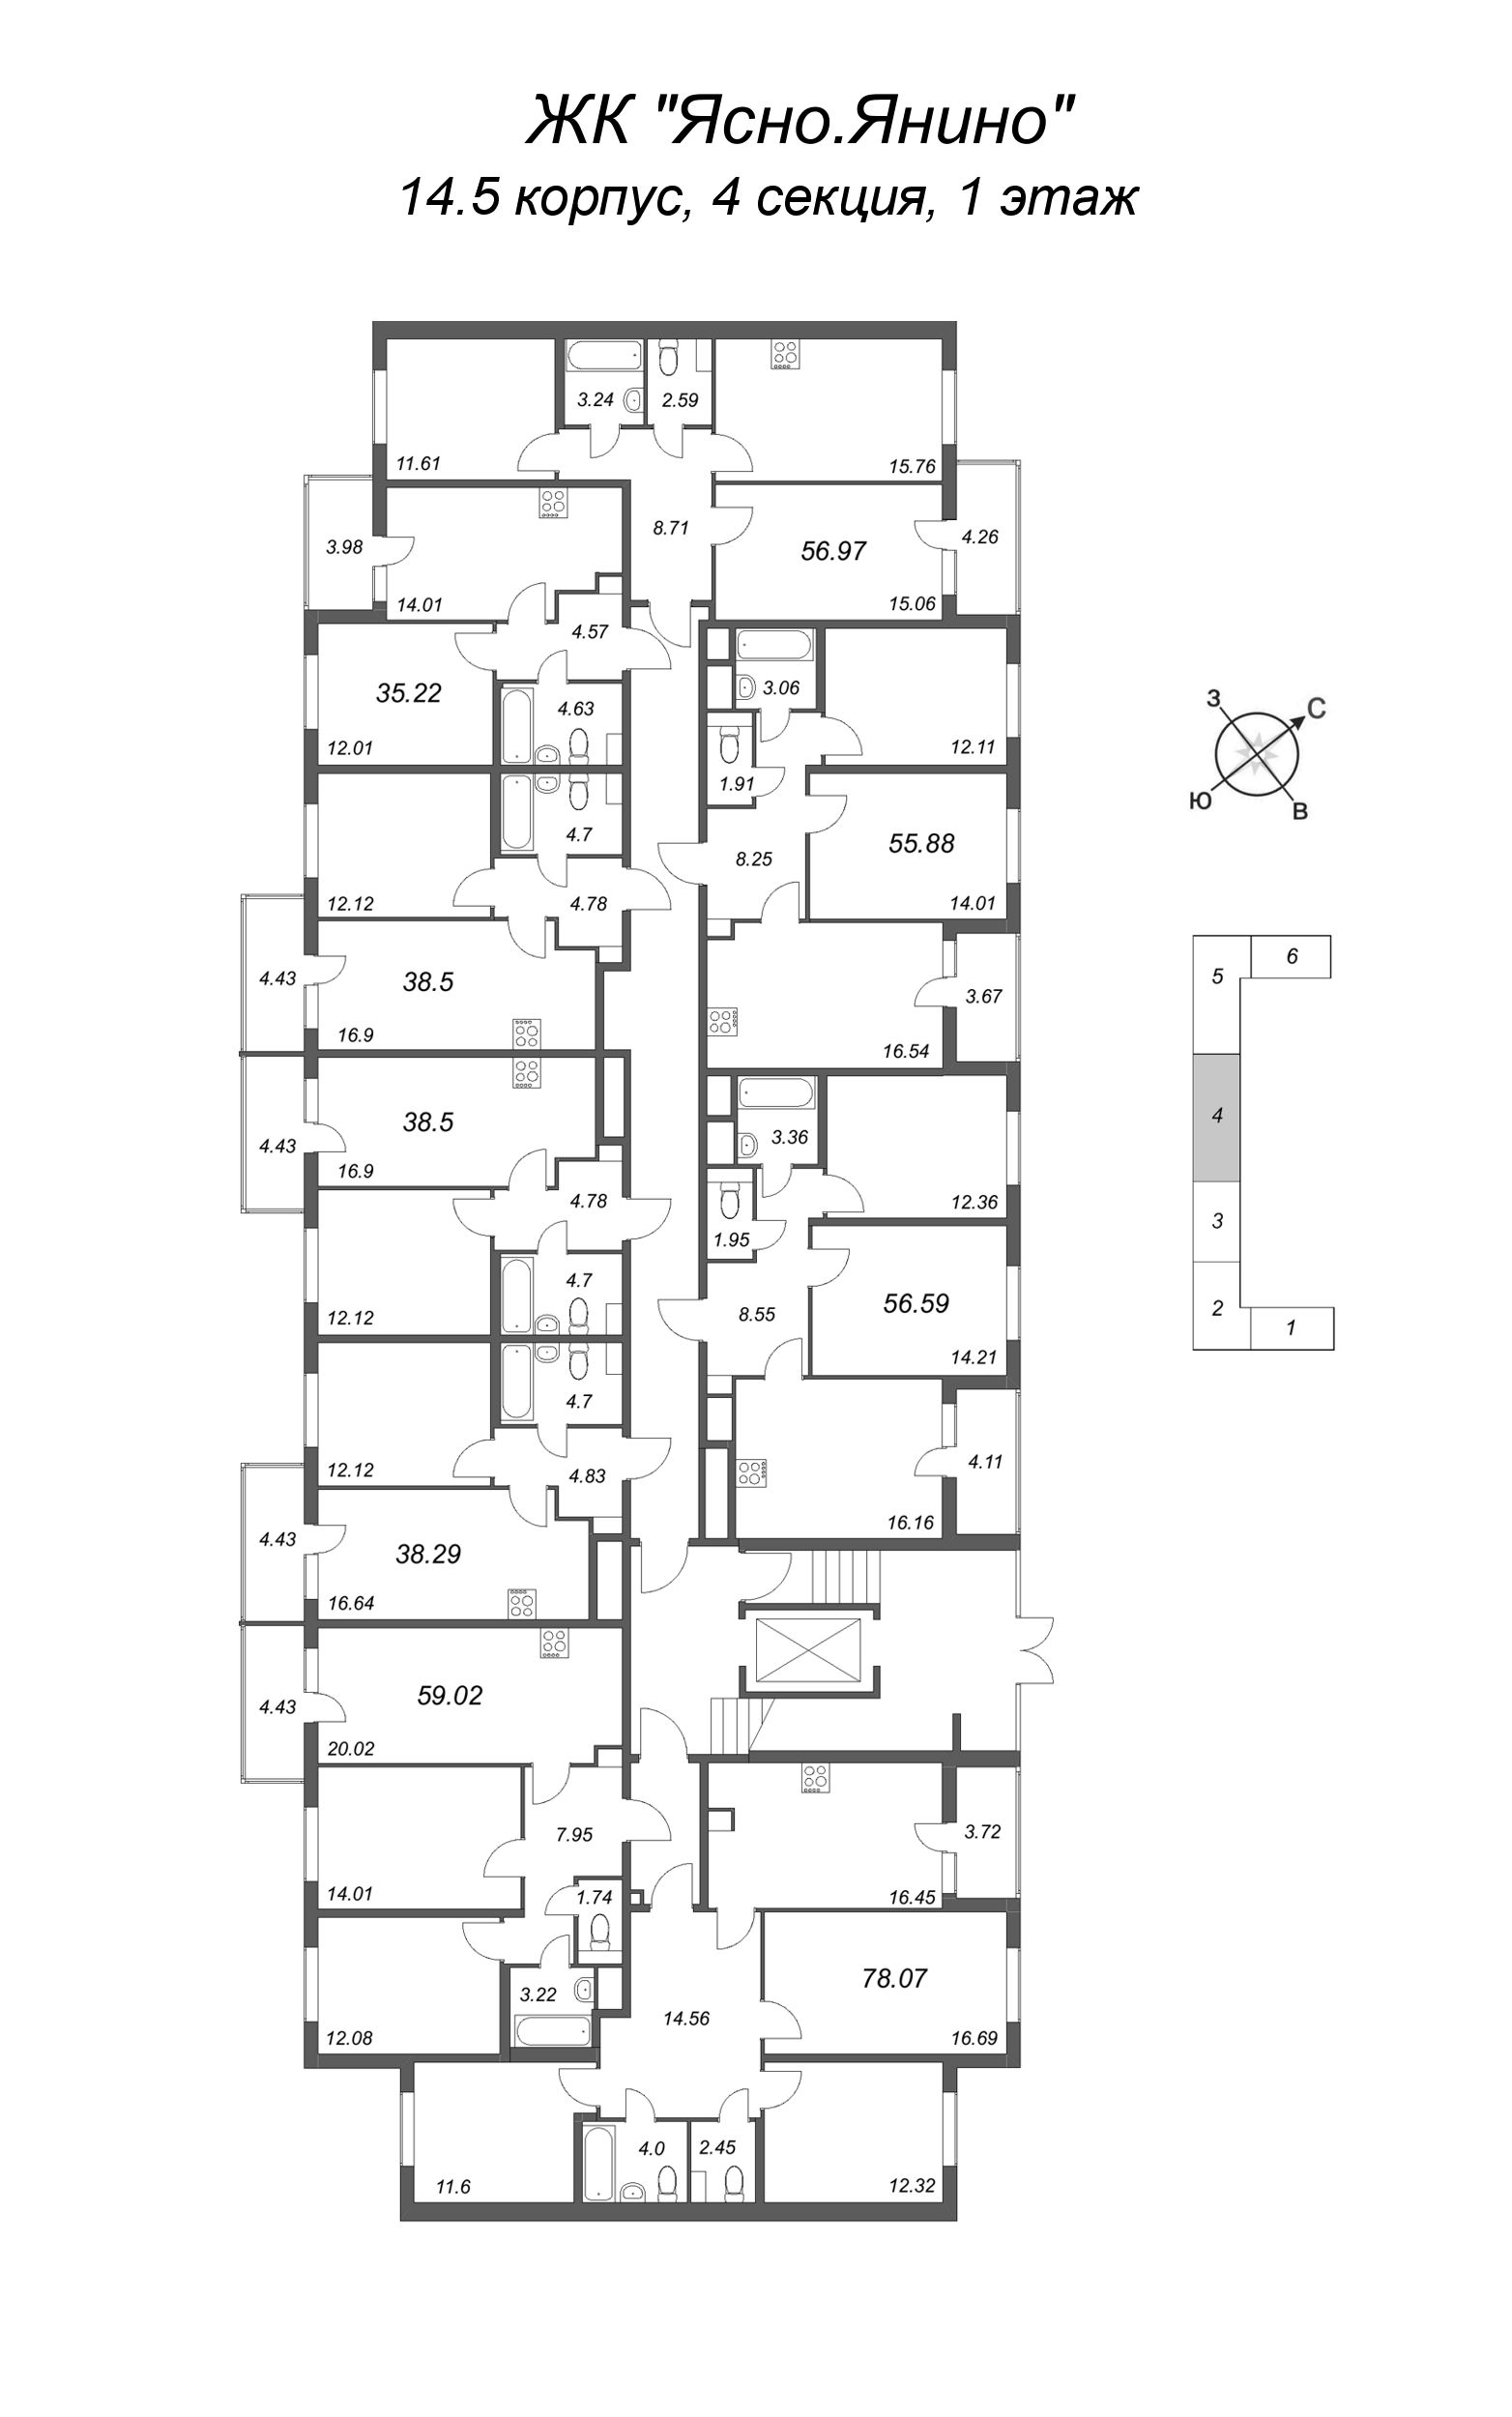 3-комнатная (Евро) квартира, 56.59 м² в ЖК "Ясно.Янино" - планировка этажа